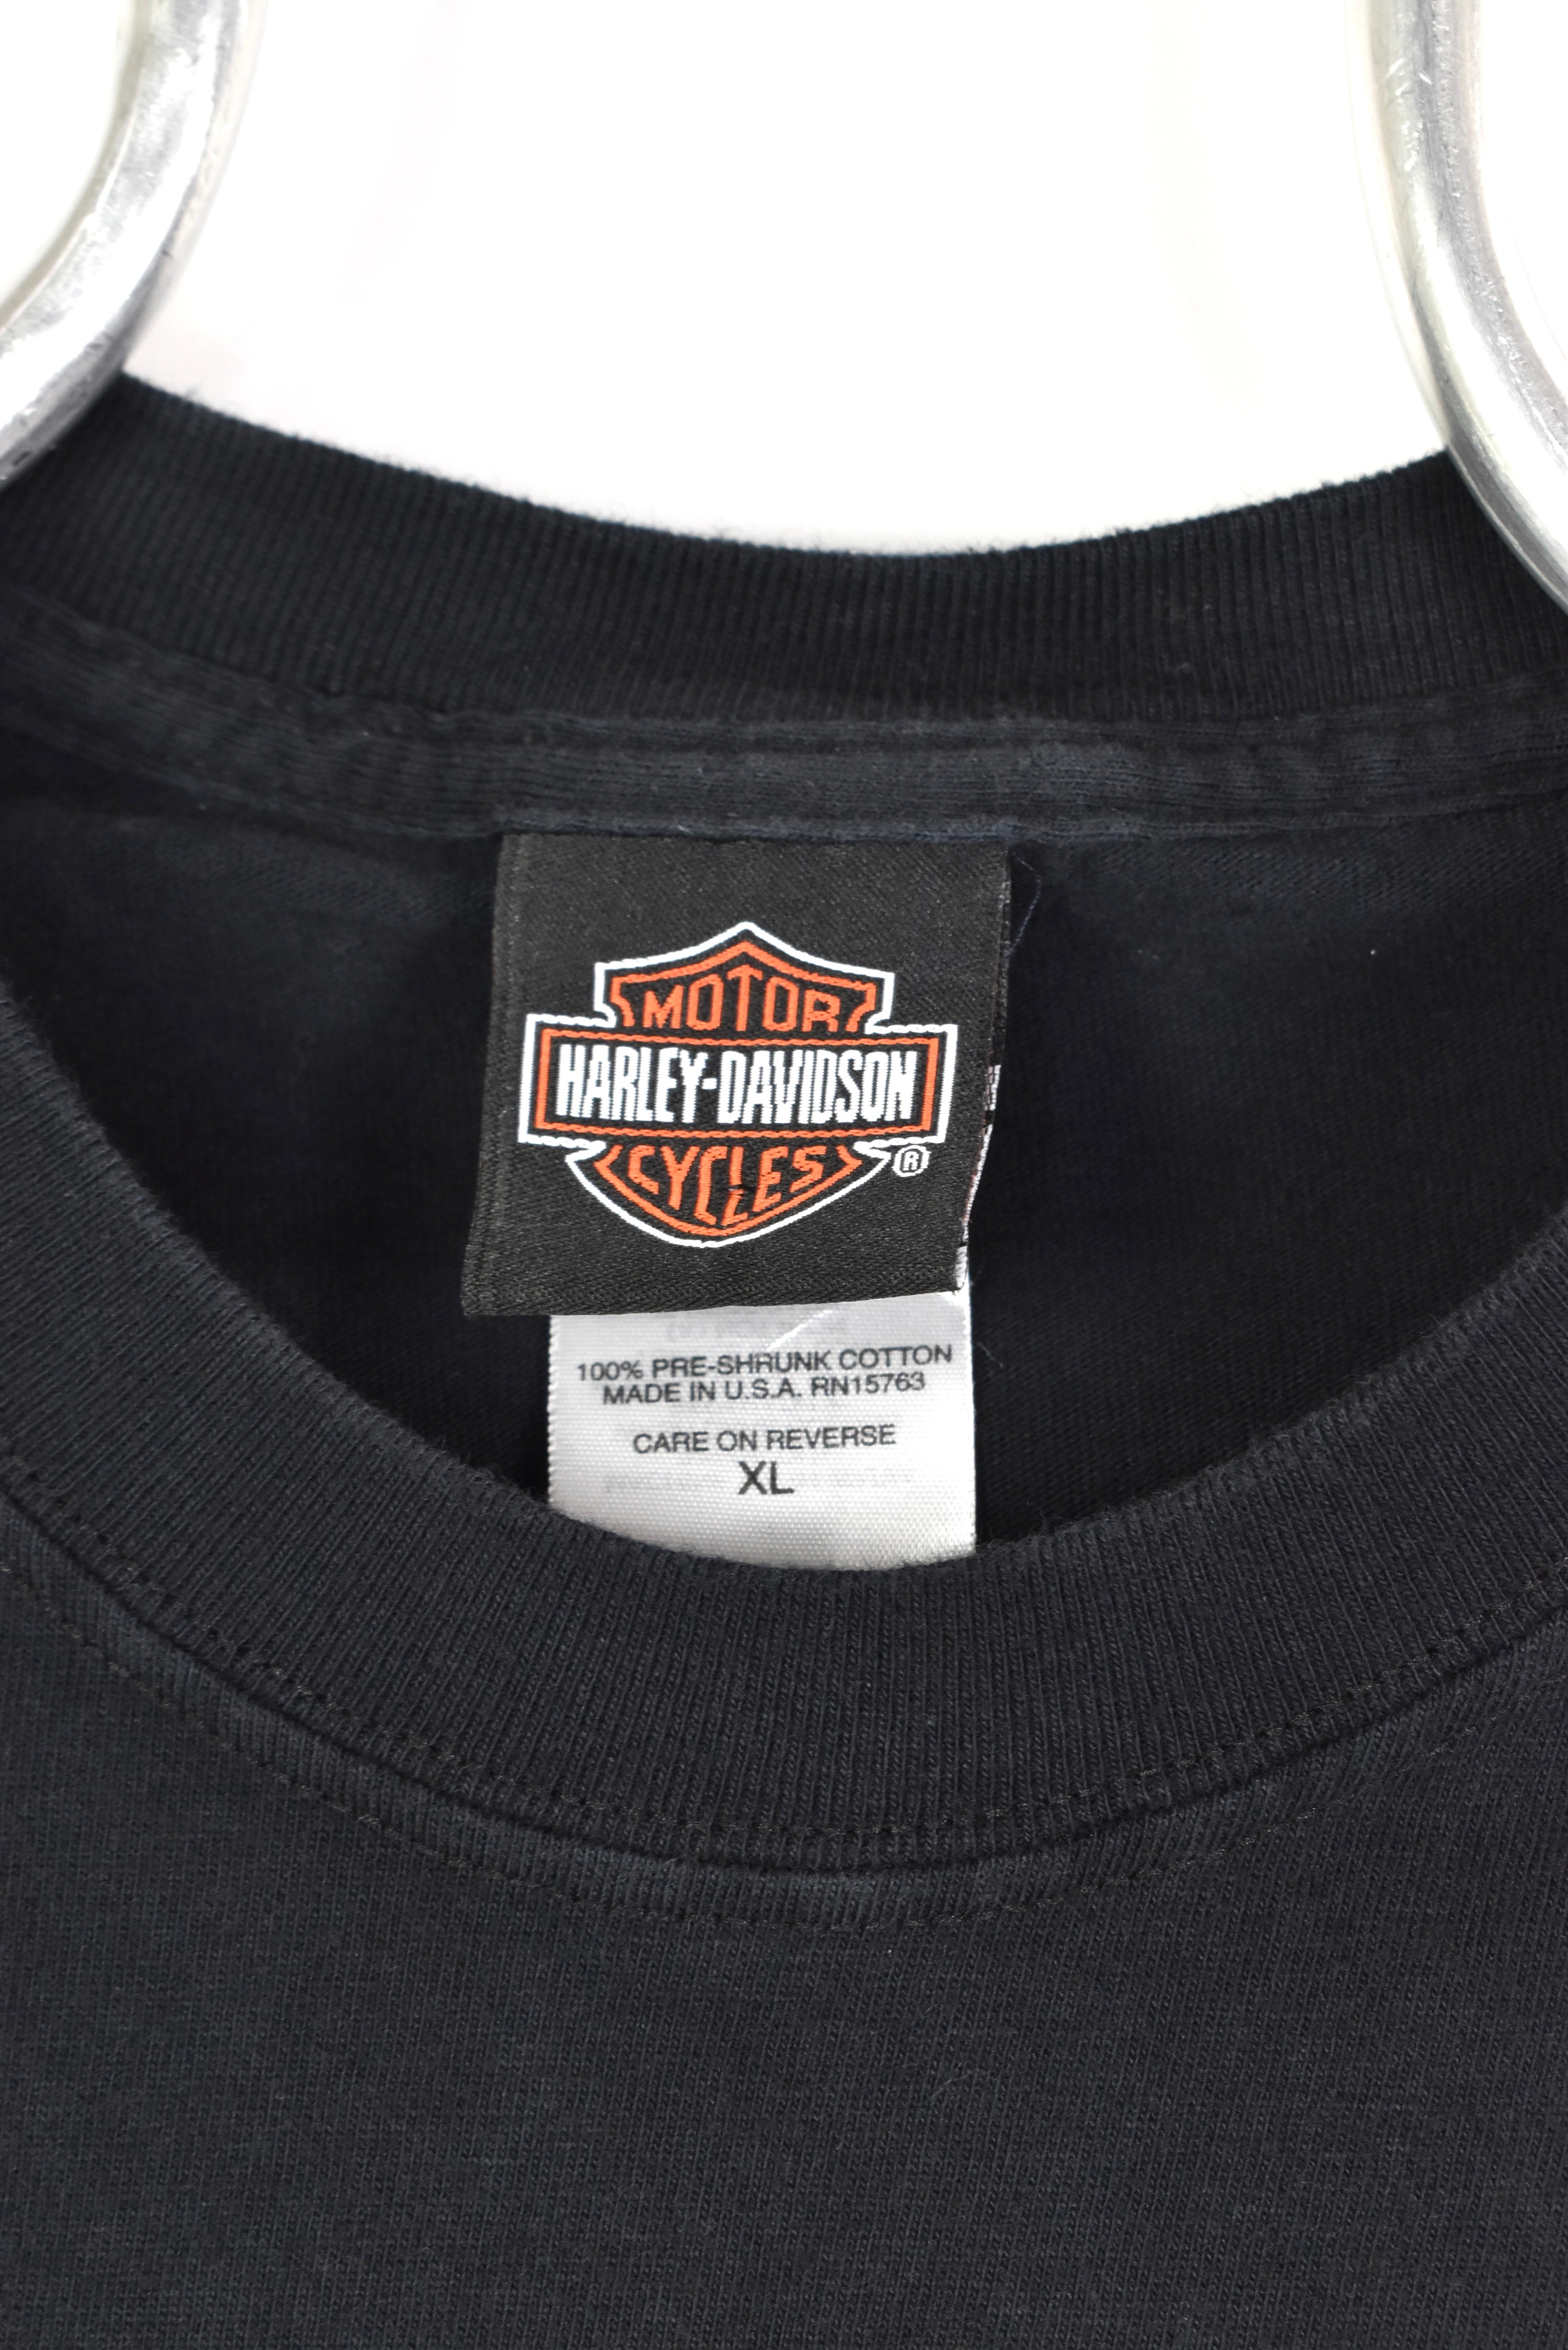 Vintage Harley Davidson shirt, motorcycle biker graphic tee - XL, black HARLEY DAVIDSON